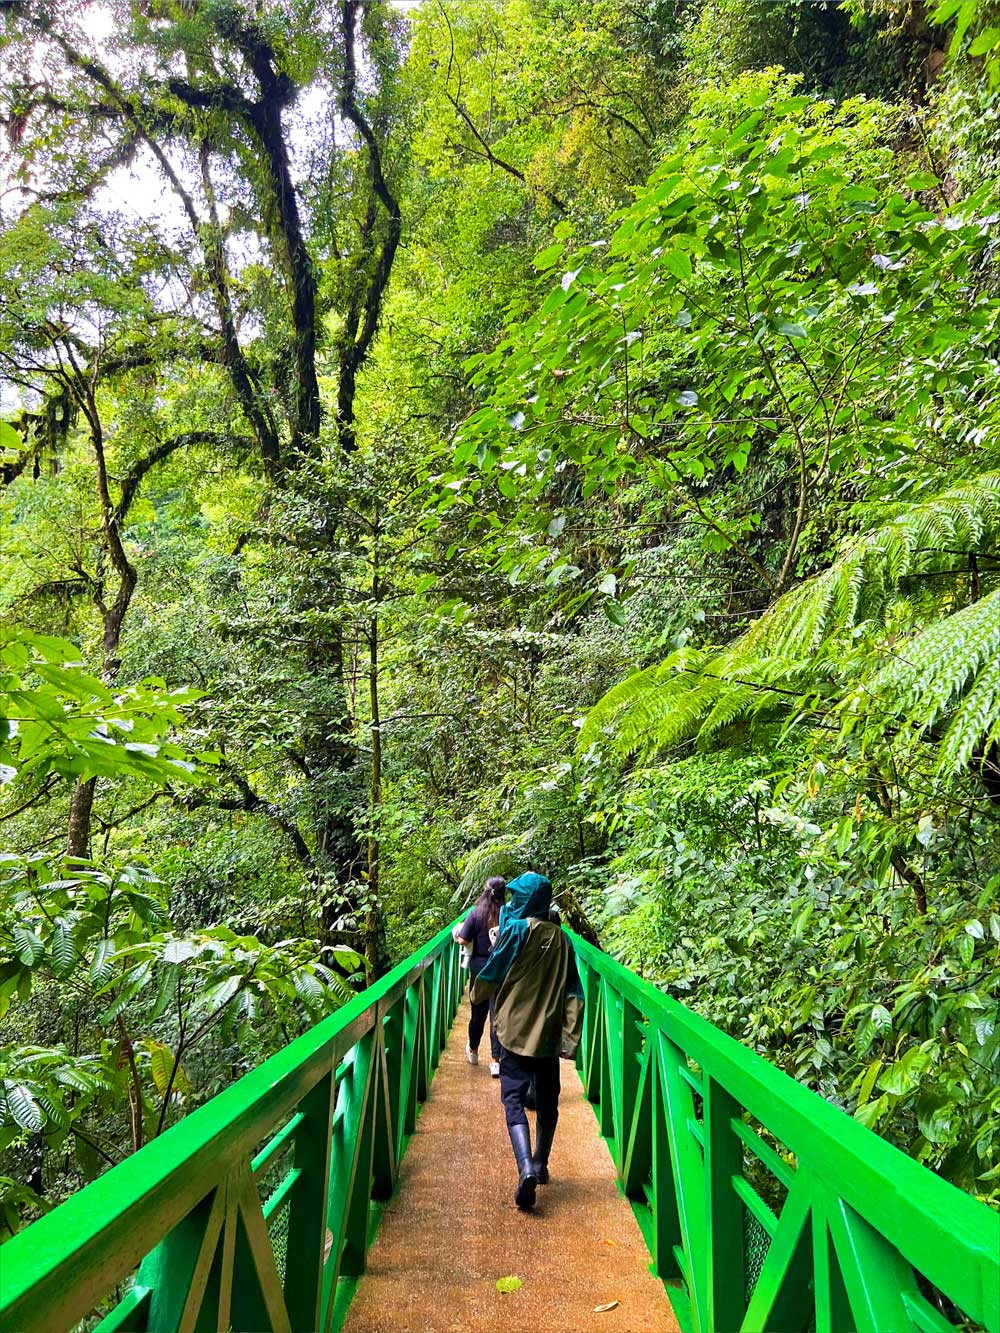 Person walking on bridge through bright green forest